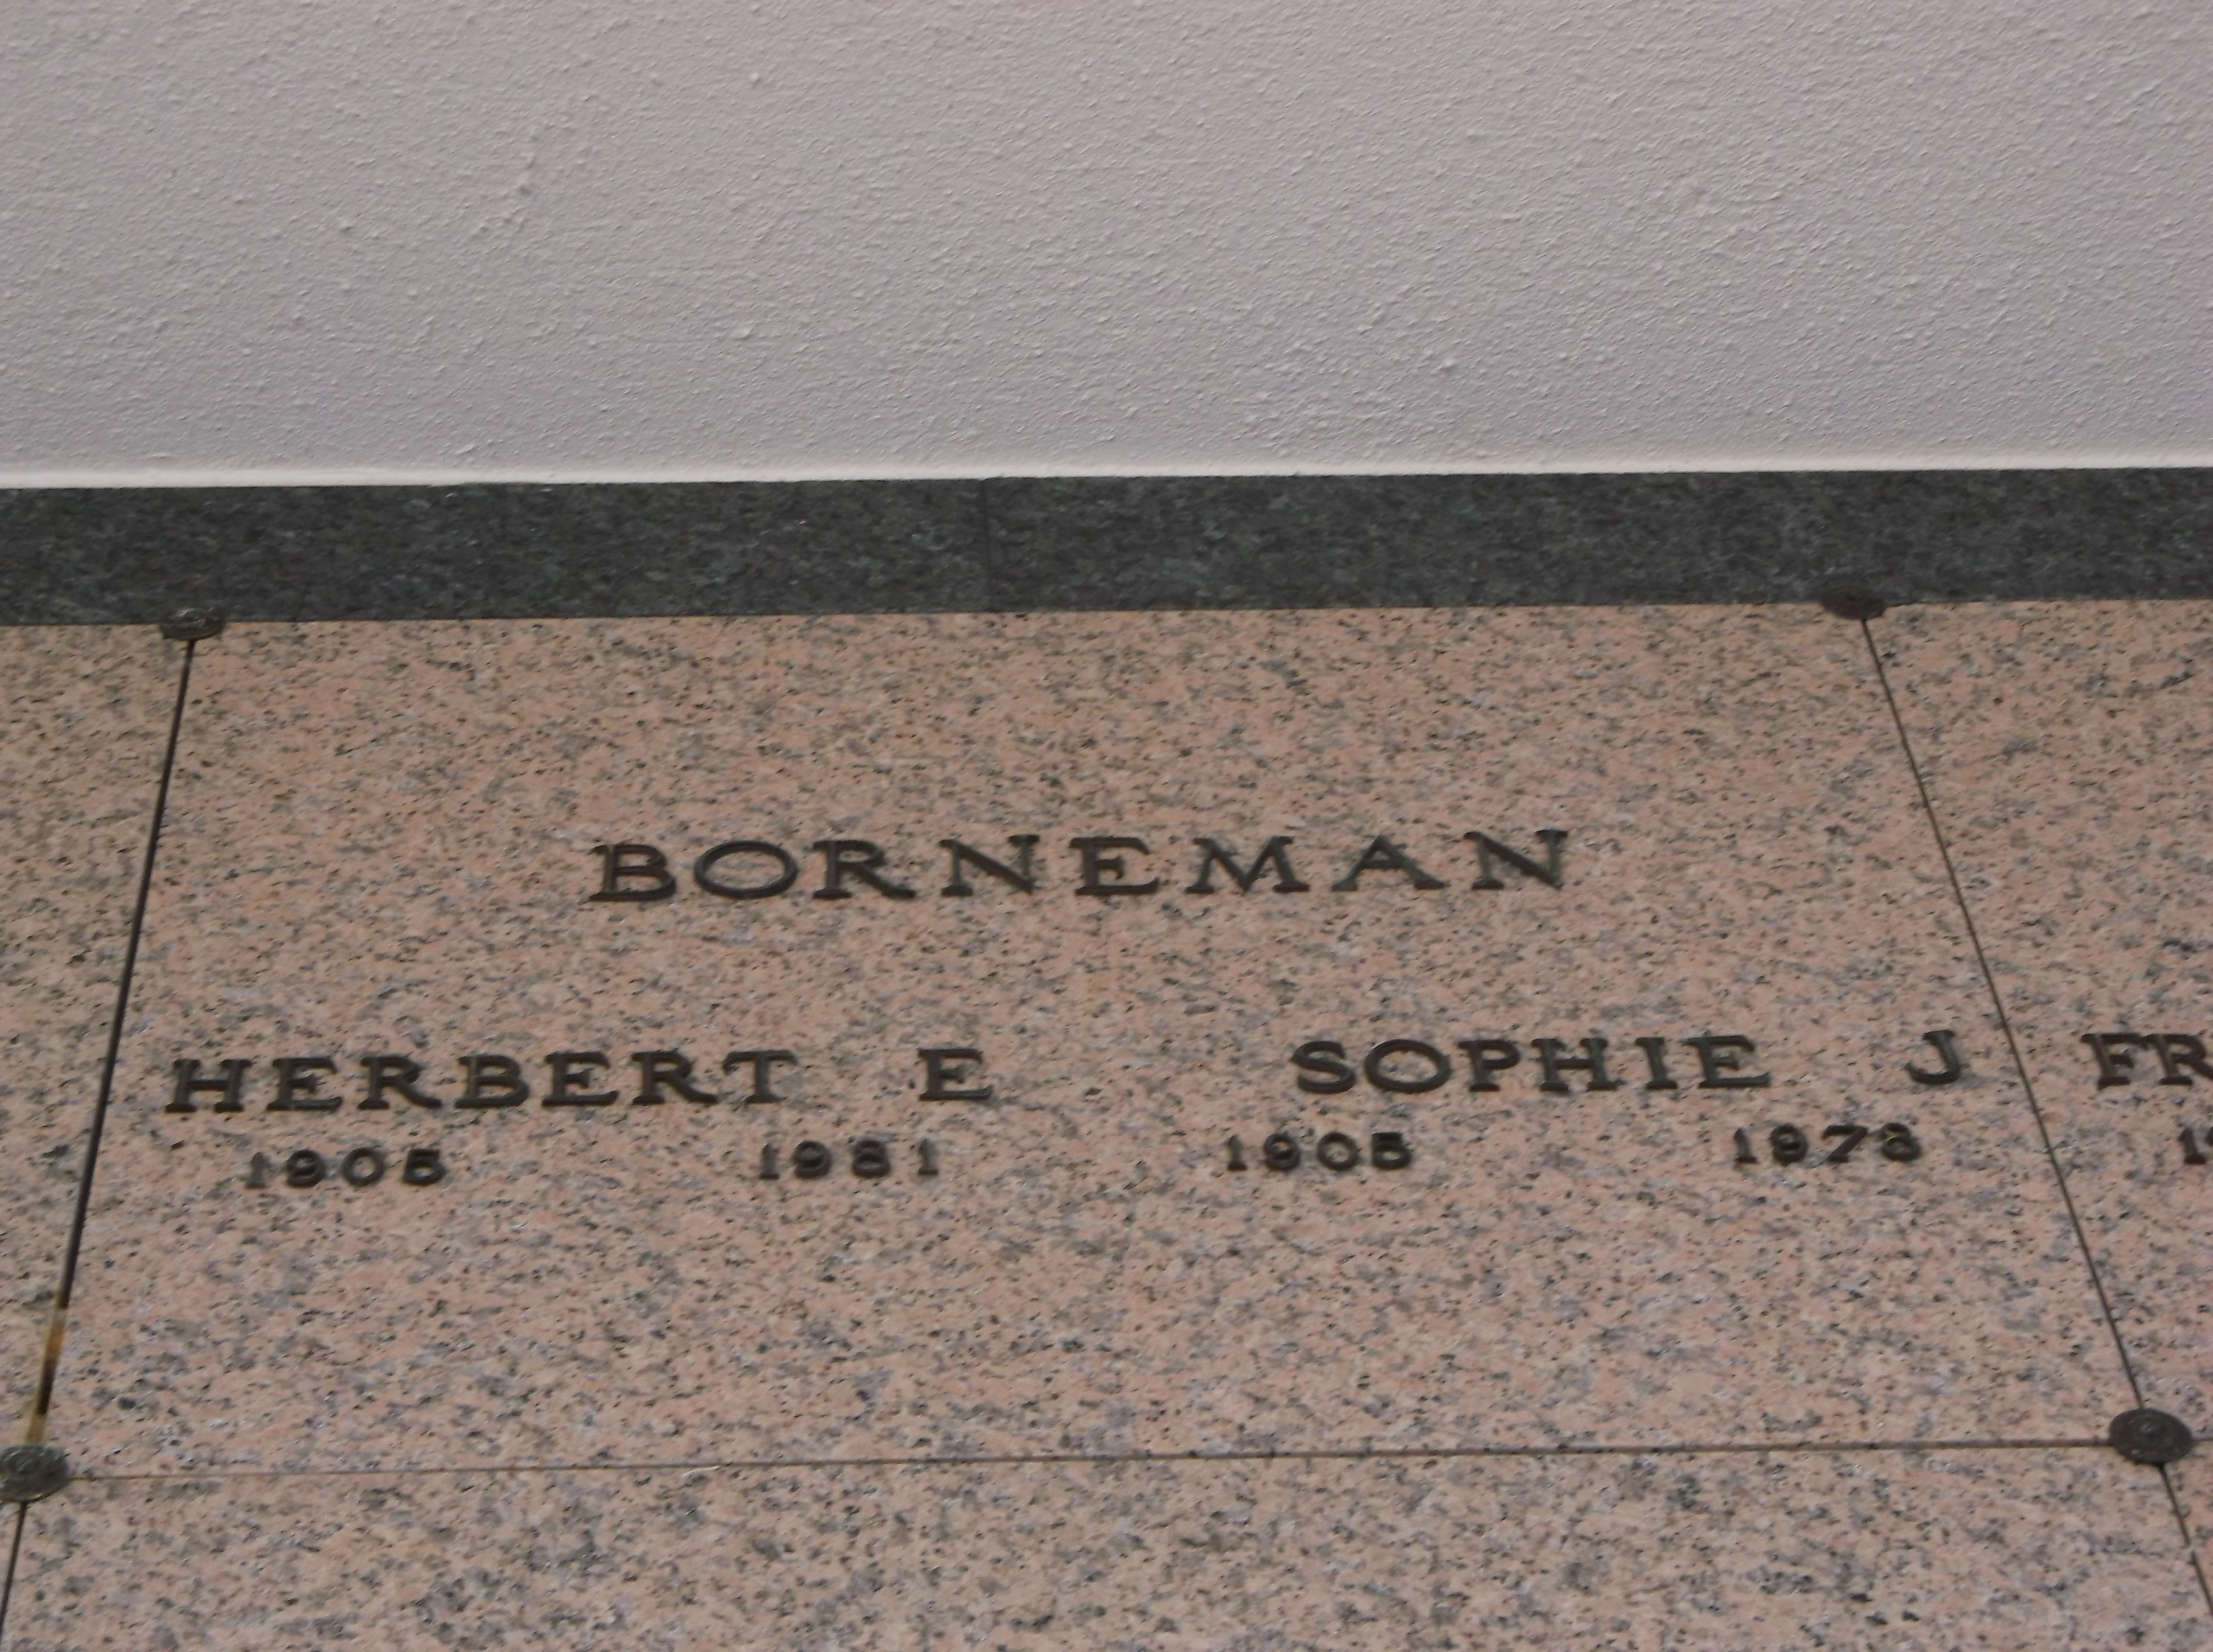 Sophie J Borneman